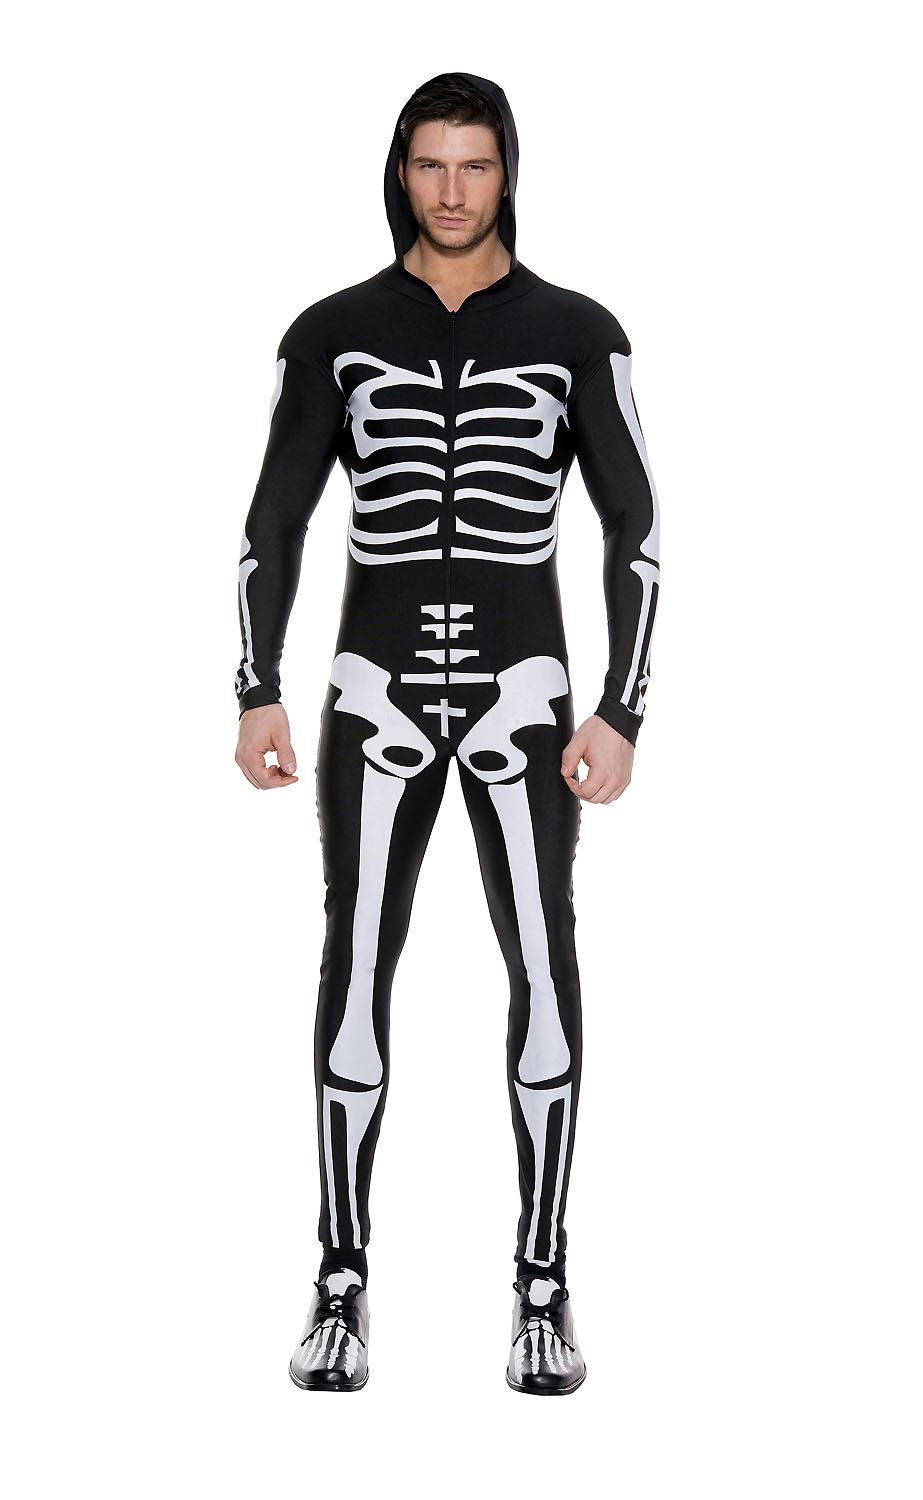 Adult Skeleton Bodysuit Men Costume 37.99 The Costume Land